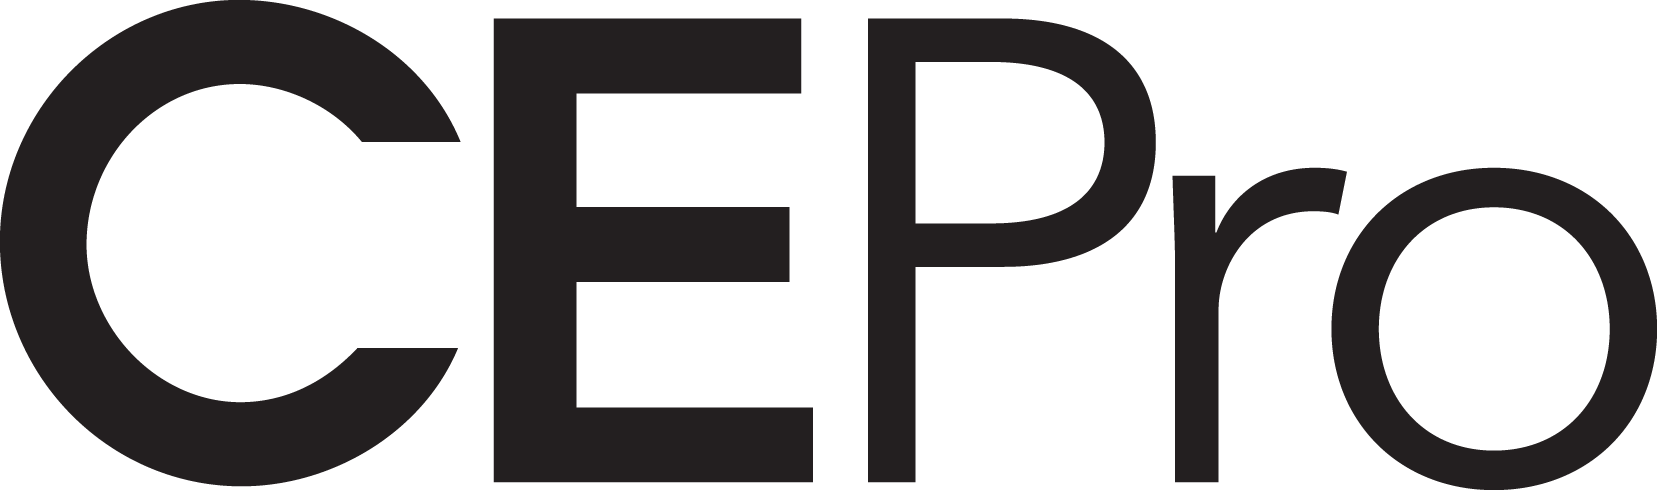 Ce Pro Logo Png (1657x490)